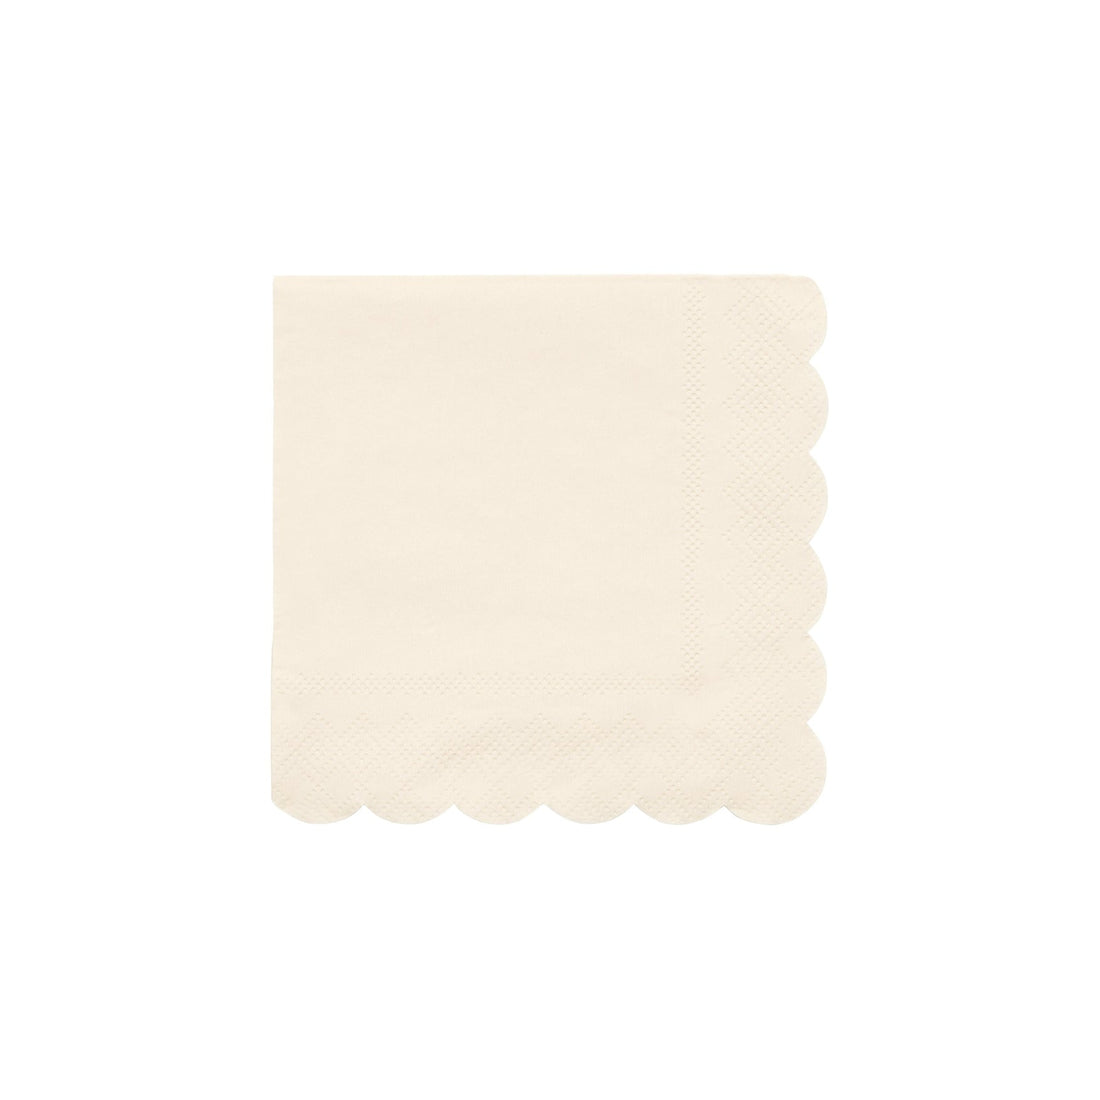 A single Cream Eco Napkin by Meri Meri with scalloped edges against a plain background.